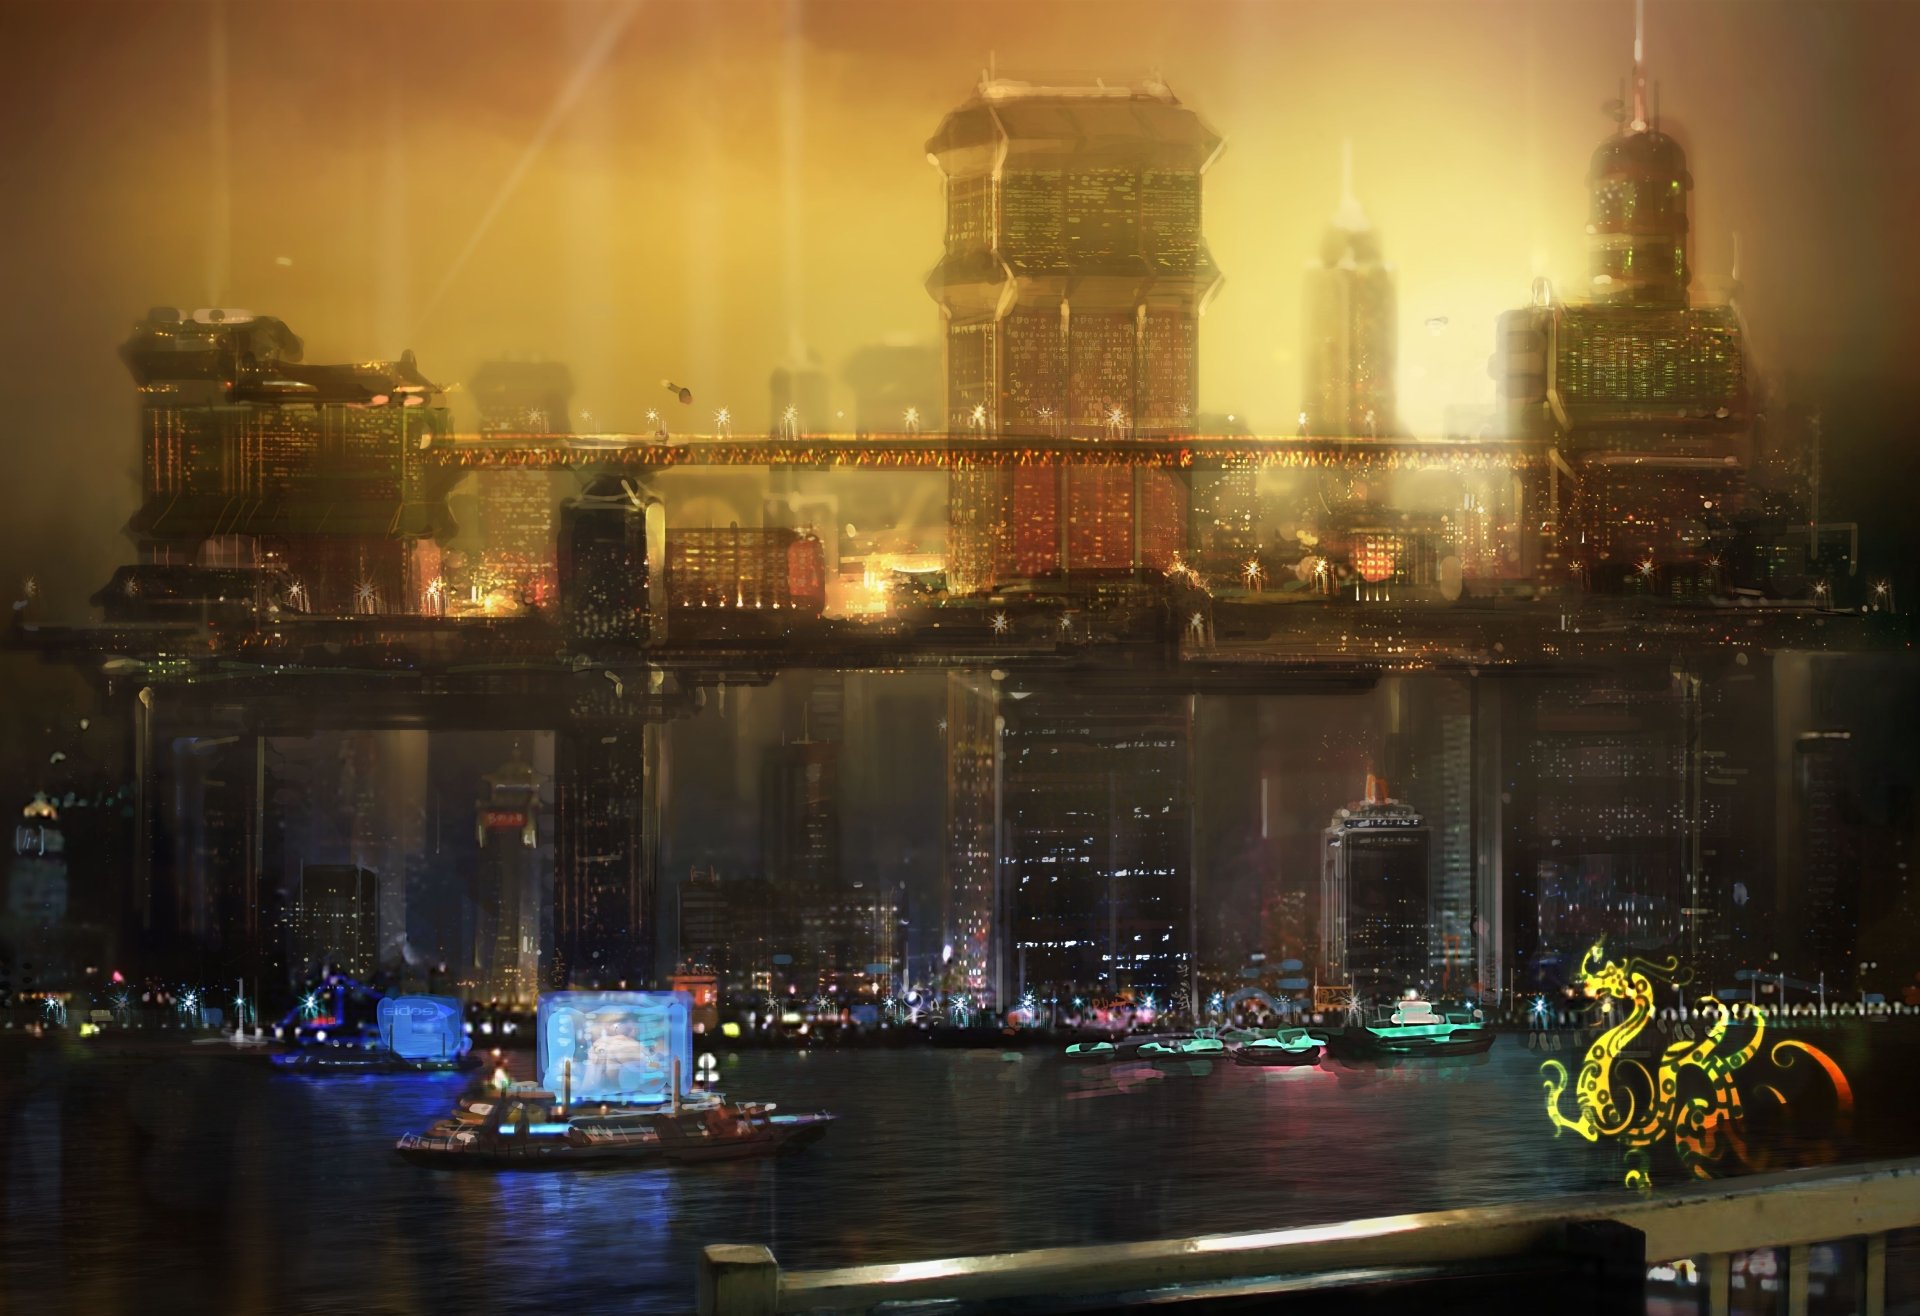 4K Ultra HD Deus Ex: Human Revolution Wallpaper and Background Image